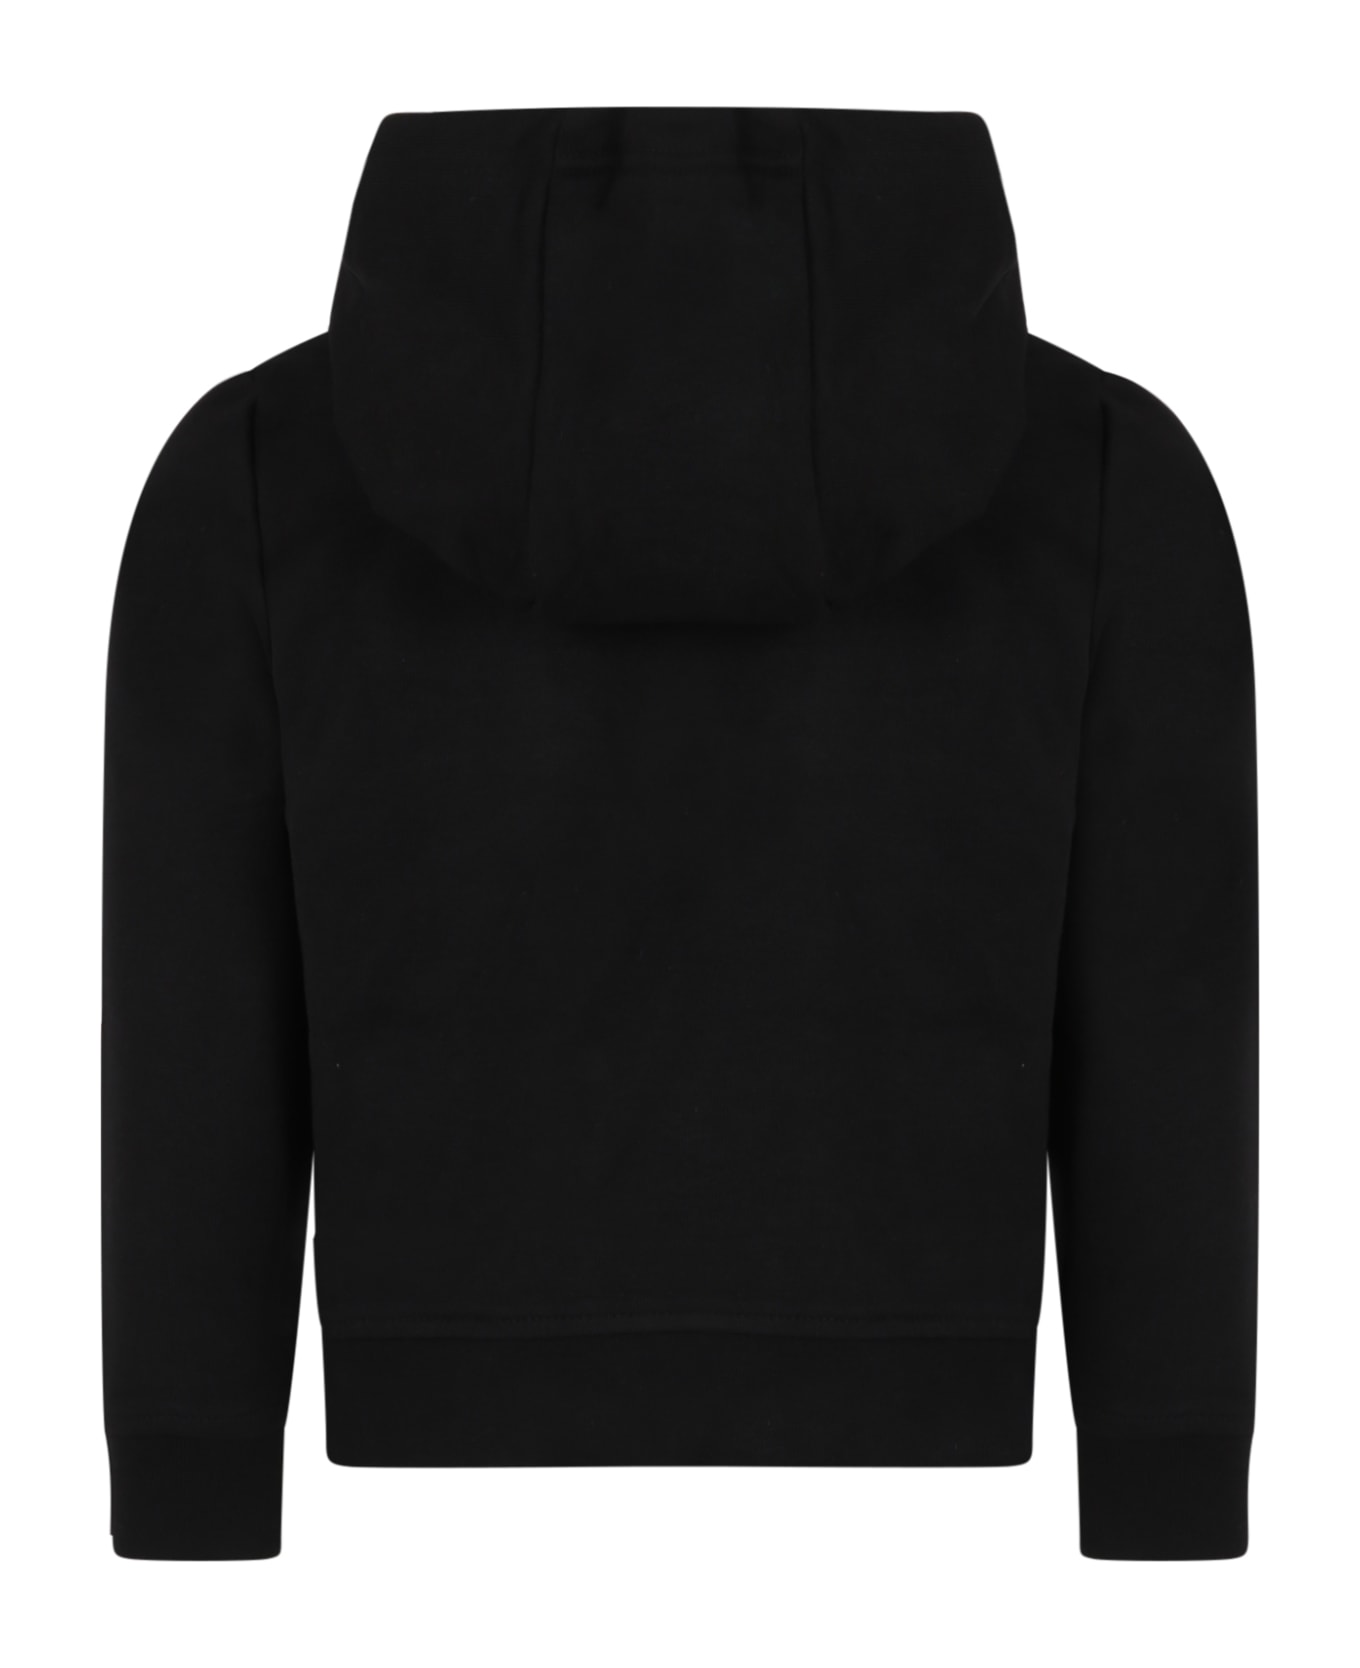 Hugo Boss Black Sweatshirt For Boy With Logo - Black